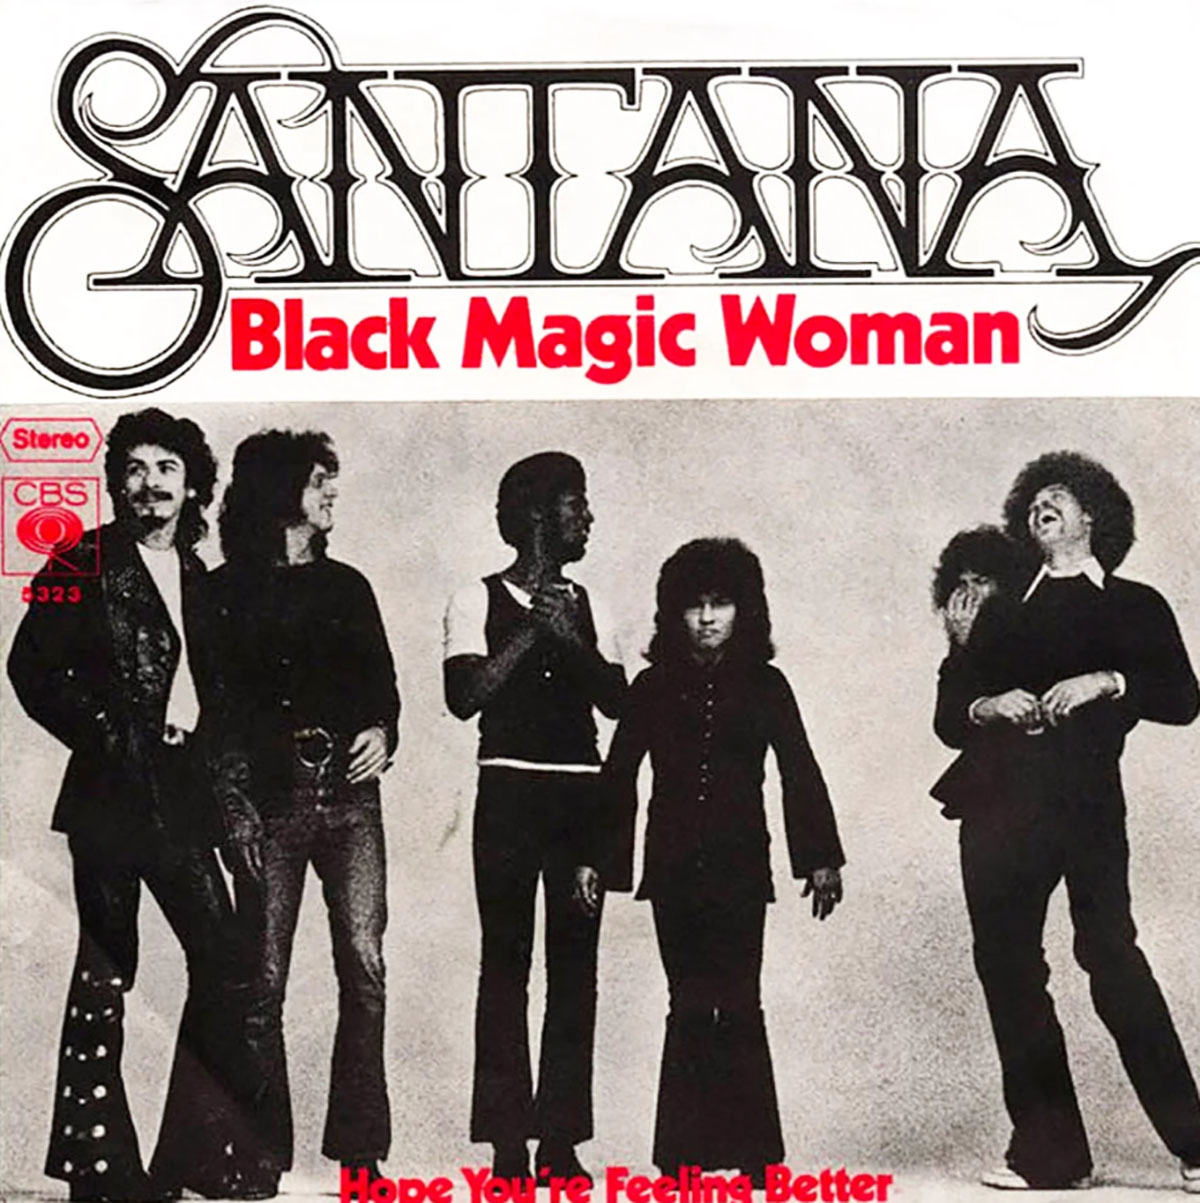 Singles del álbum Abraxas: "Black Magic Woman" - cara A y "Hope You're Feeling Better" - cara B